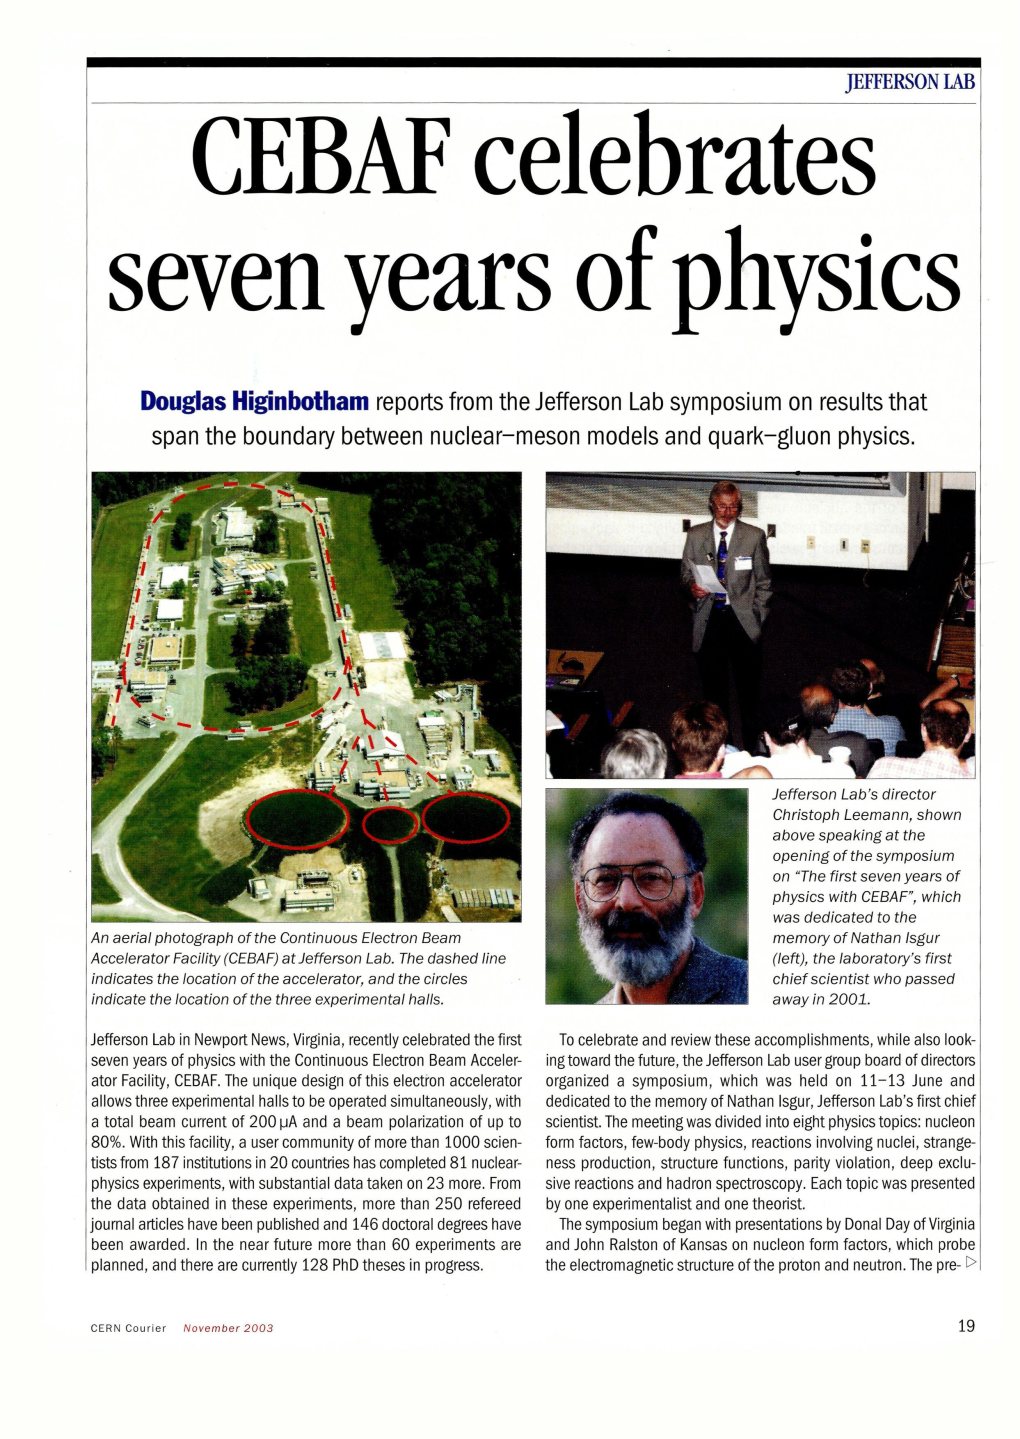 CEBAF Celebrates Seven Years of Physics